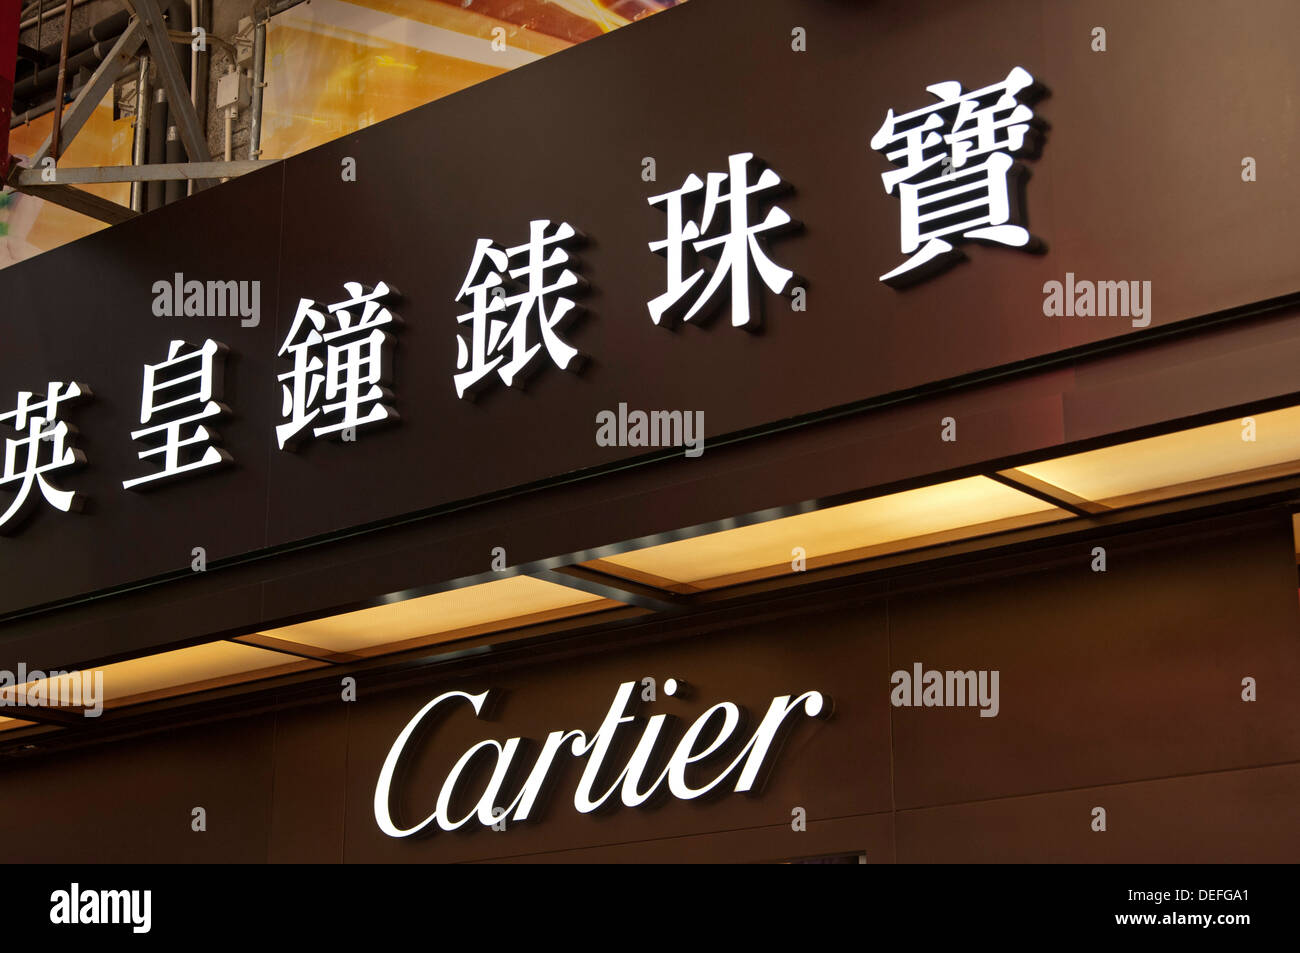 cartier company hong kong